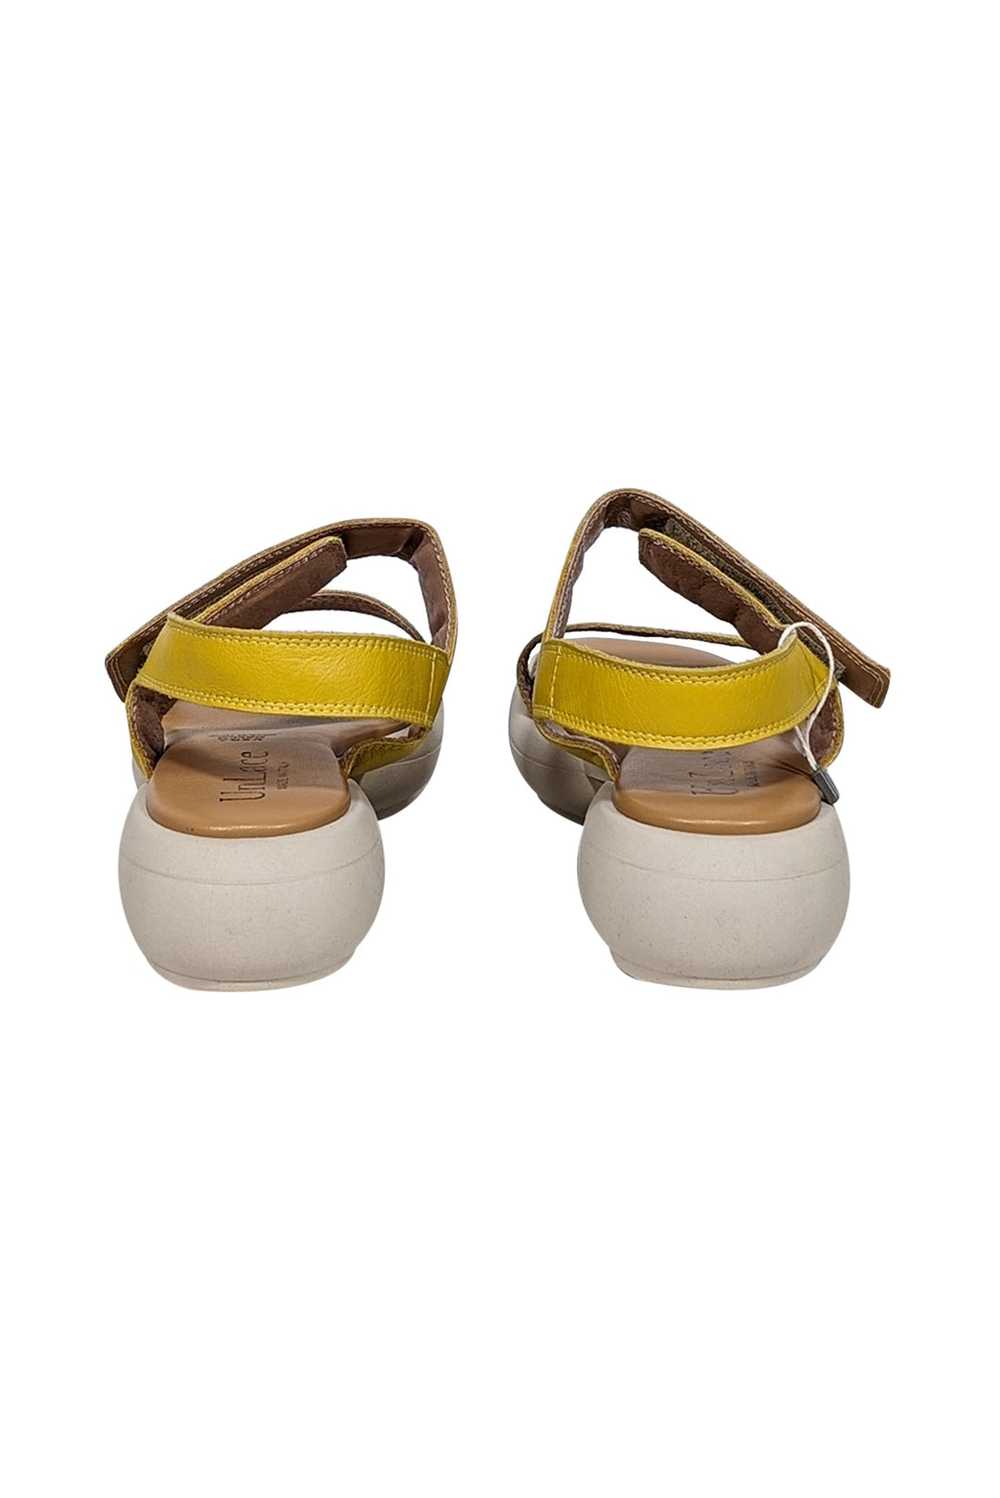 UnLace - Yellow & Cream Strappy Sandals Sz 10 - image 4